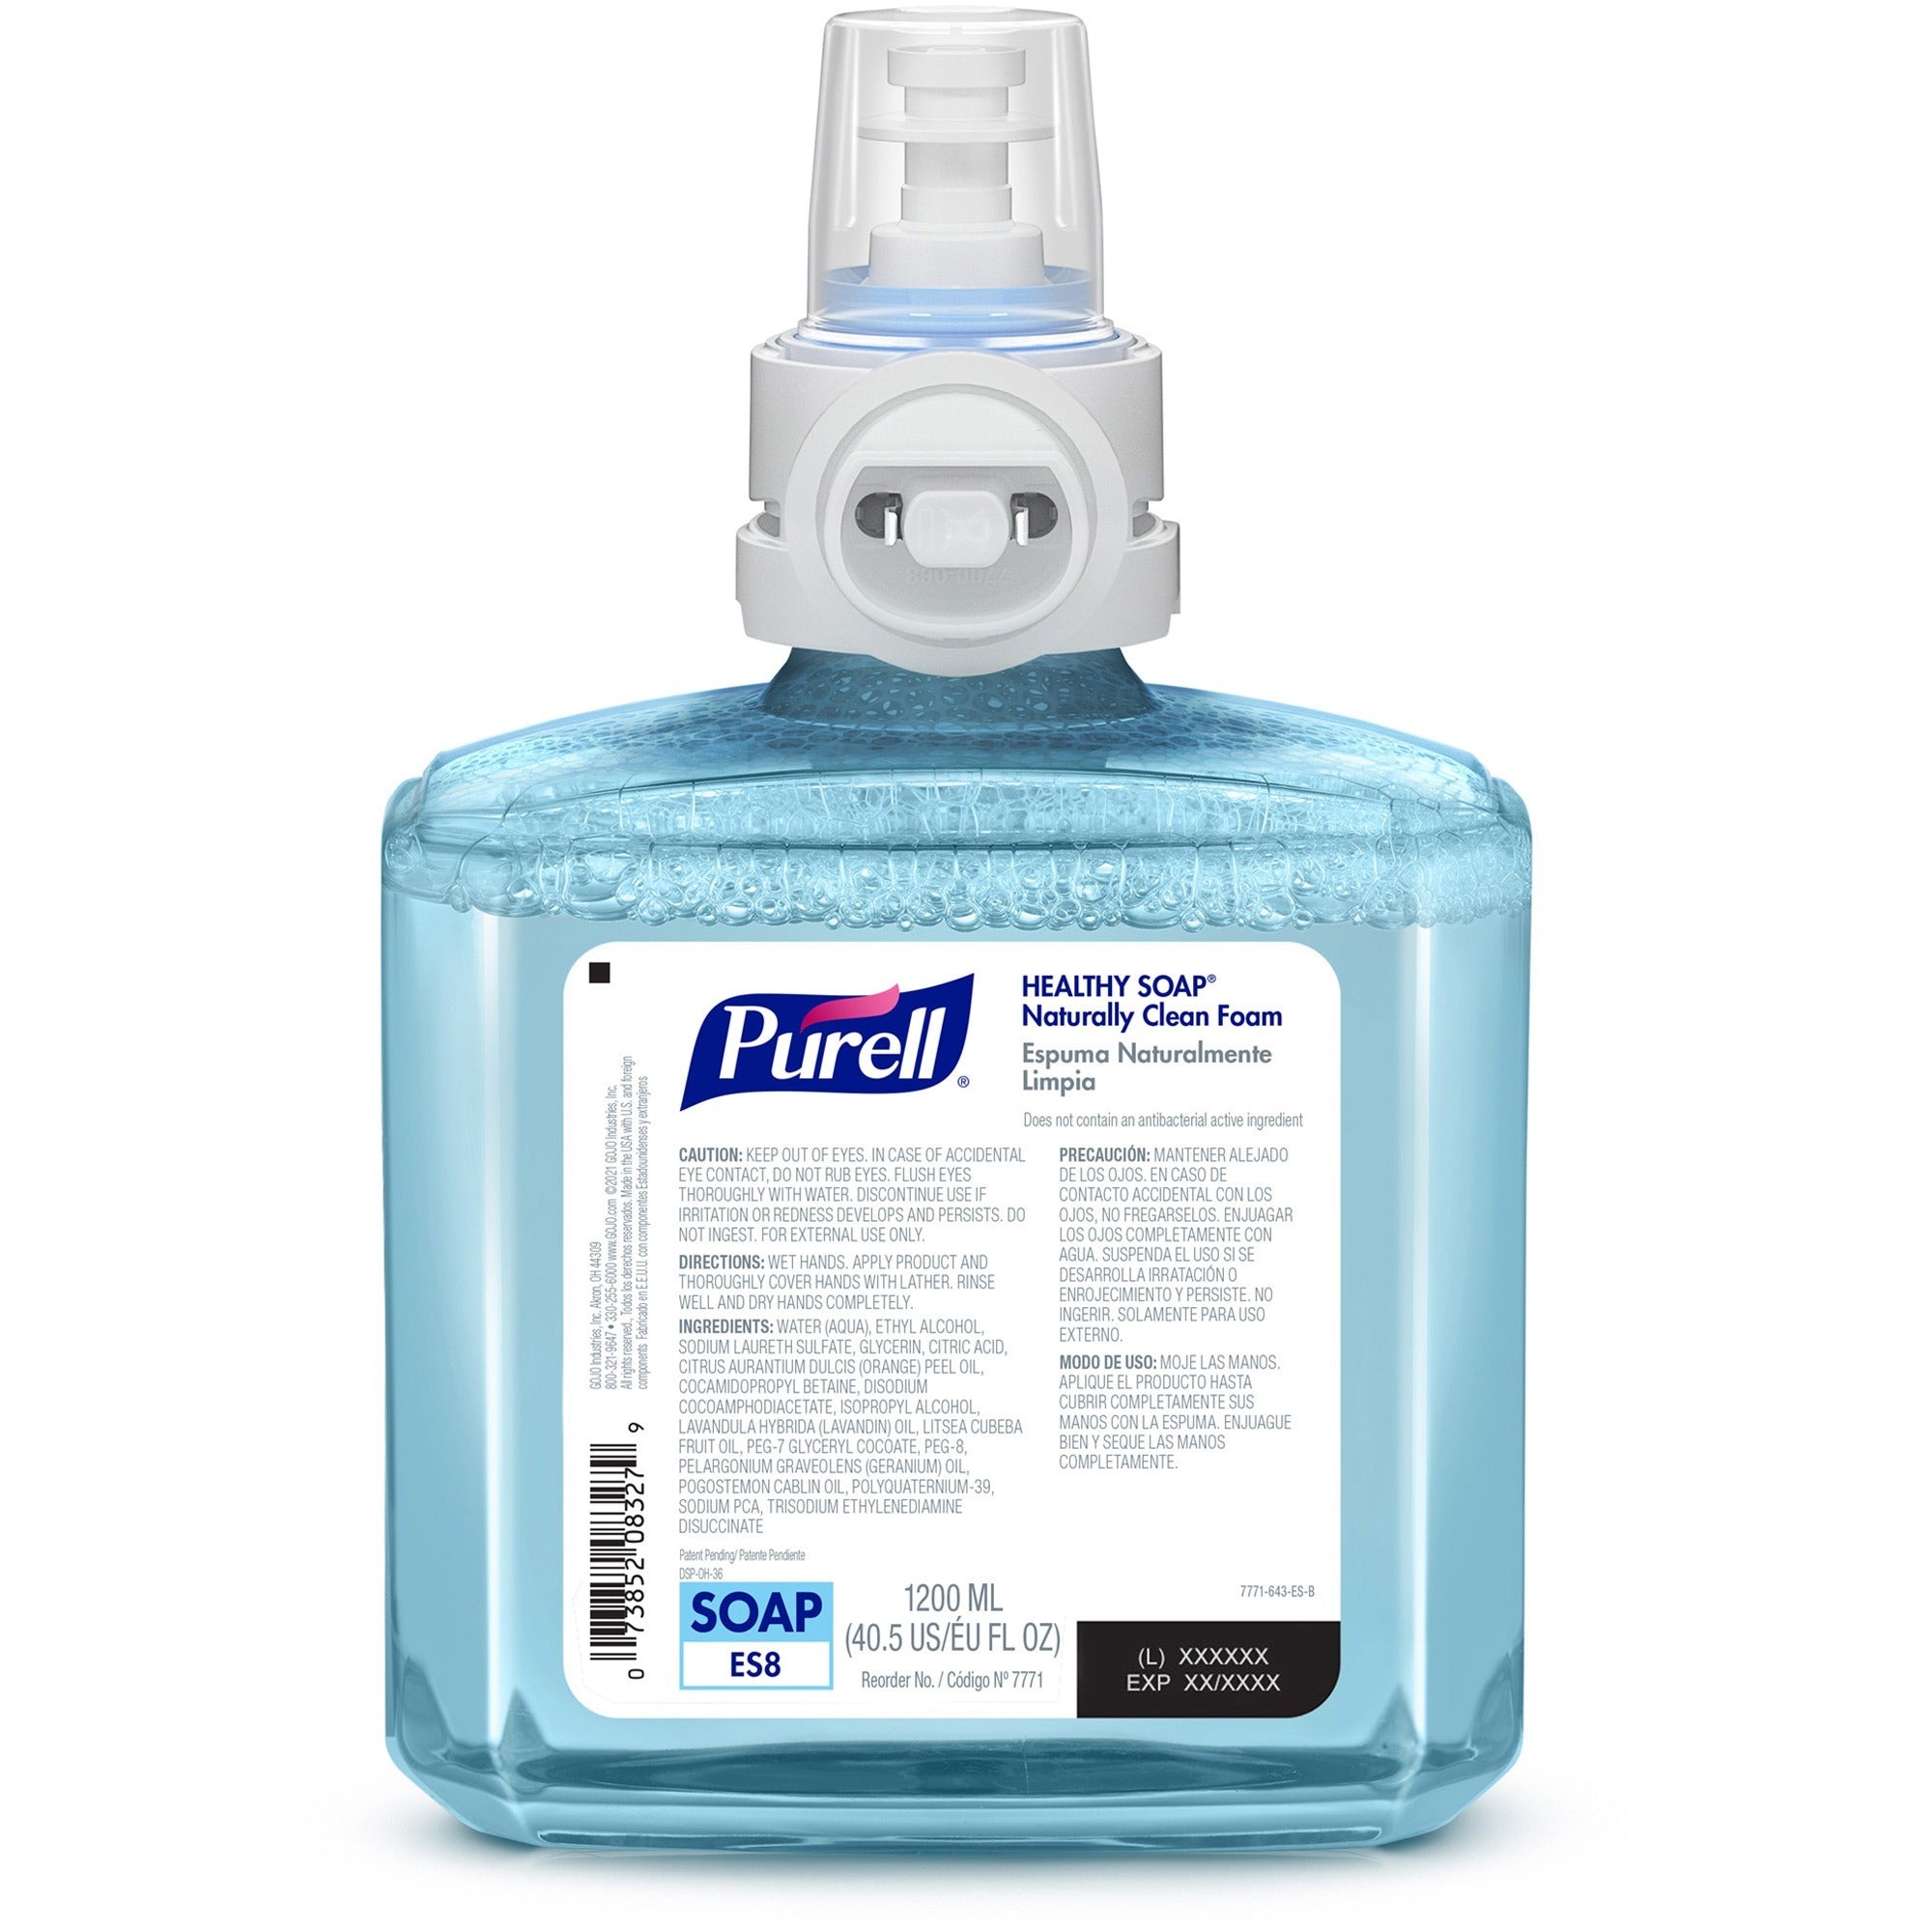 purell-es8-crt-healthy-soap-naturally-clean-foam-406-fl-oz-1200-ml-dirt-remover-kill-germs-skin-blue-preservative-free-paraben-free-phthalate-free-dye-free-bio-based-2-carton_goj777102 - 2